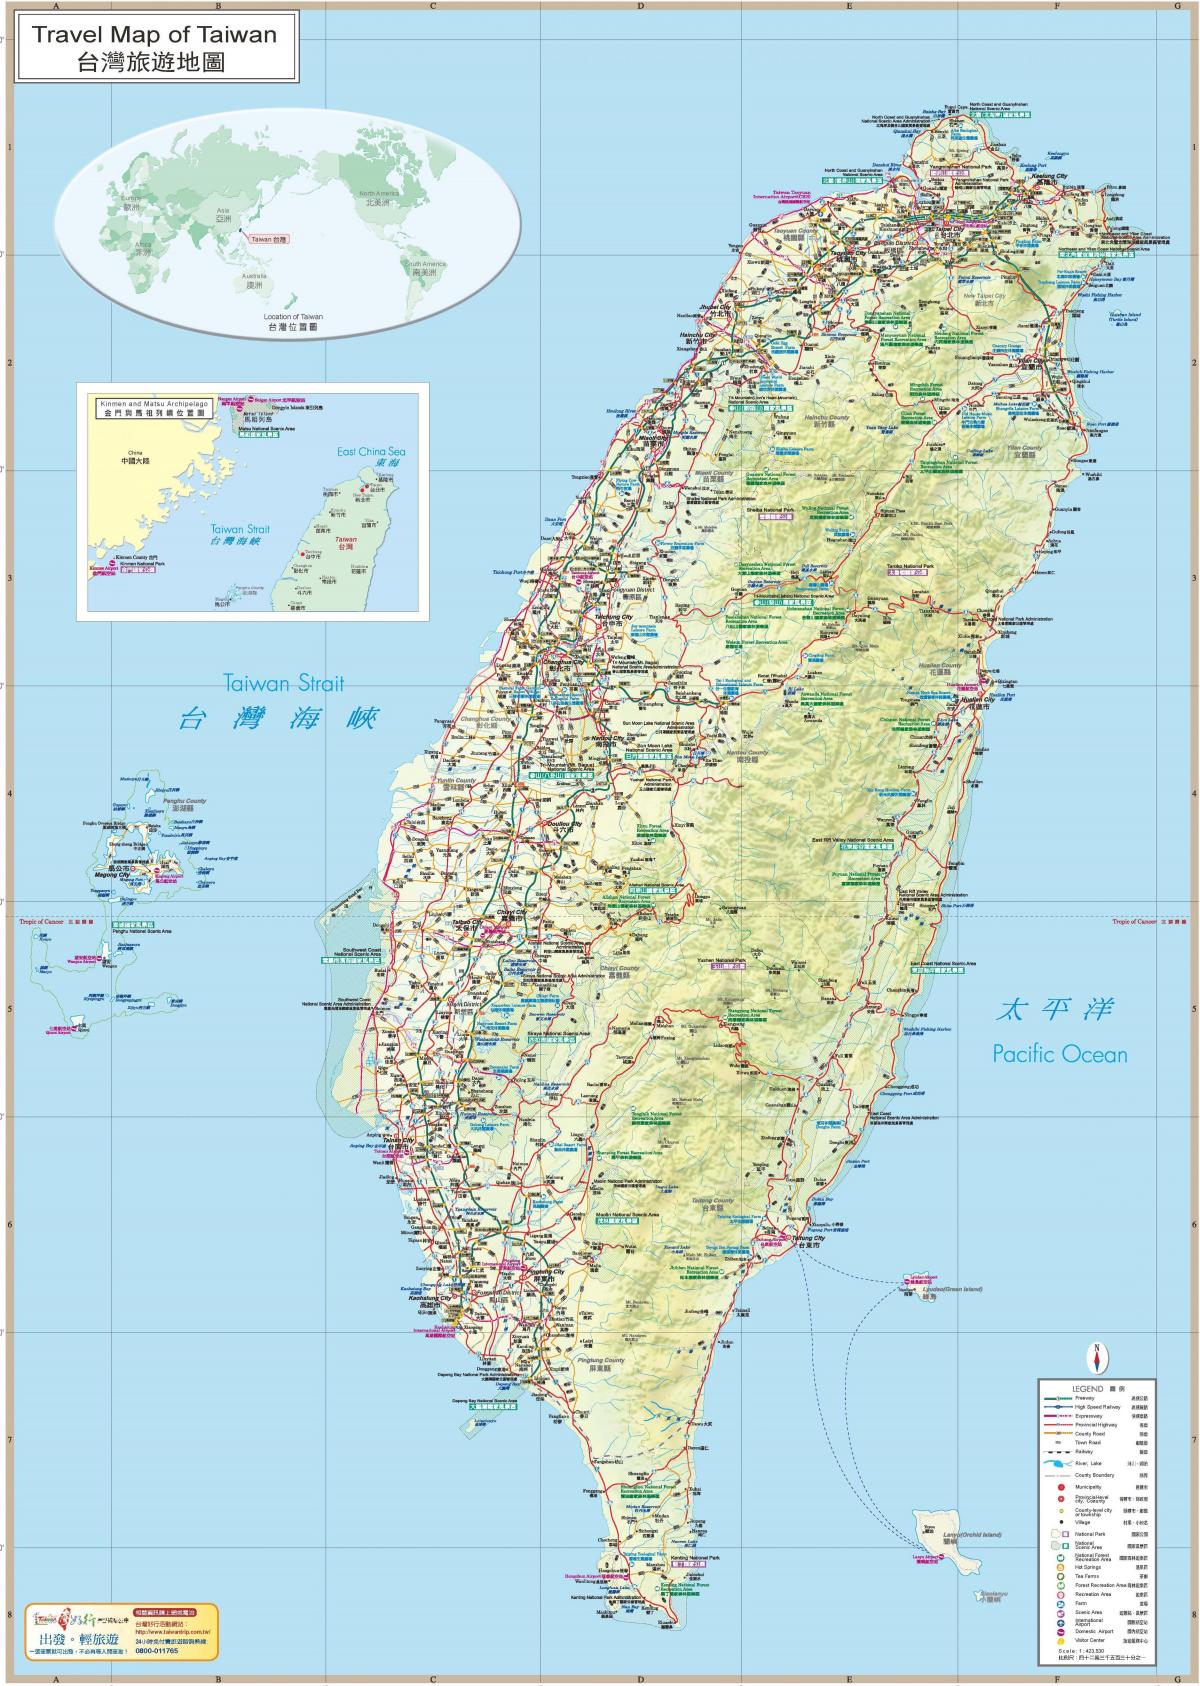 Taiwan travel guide kart